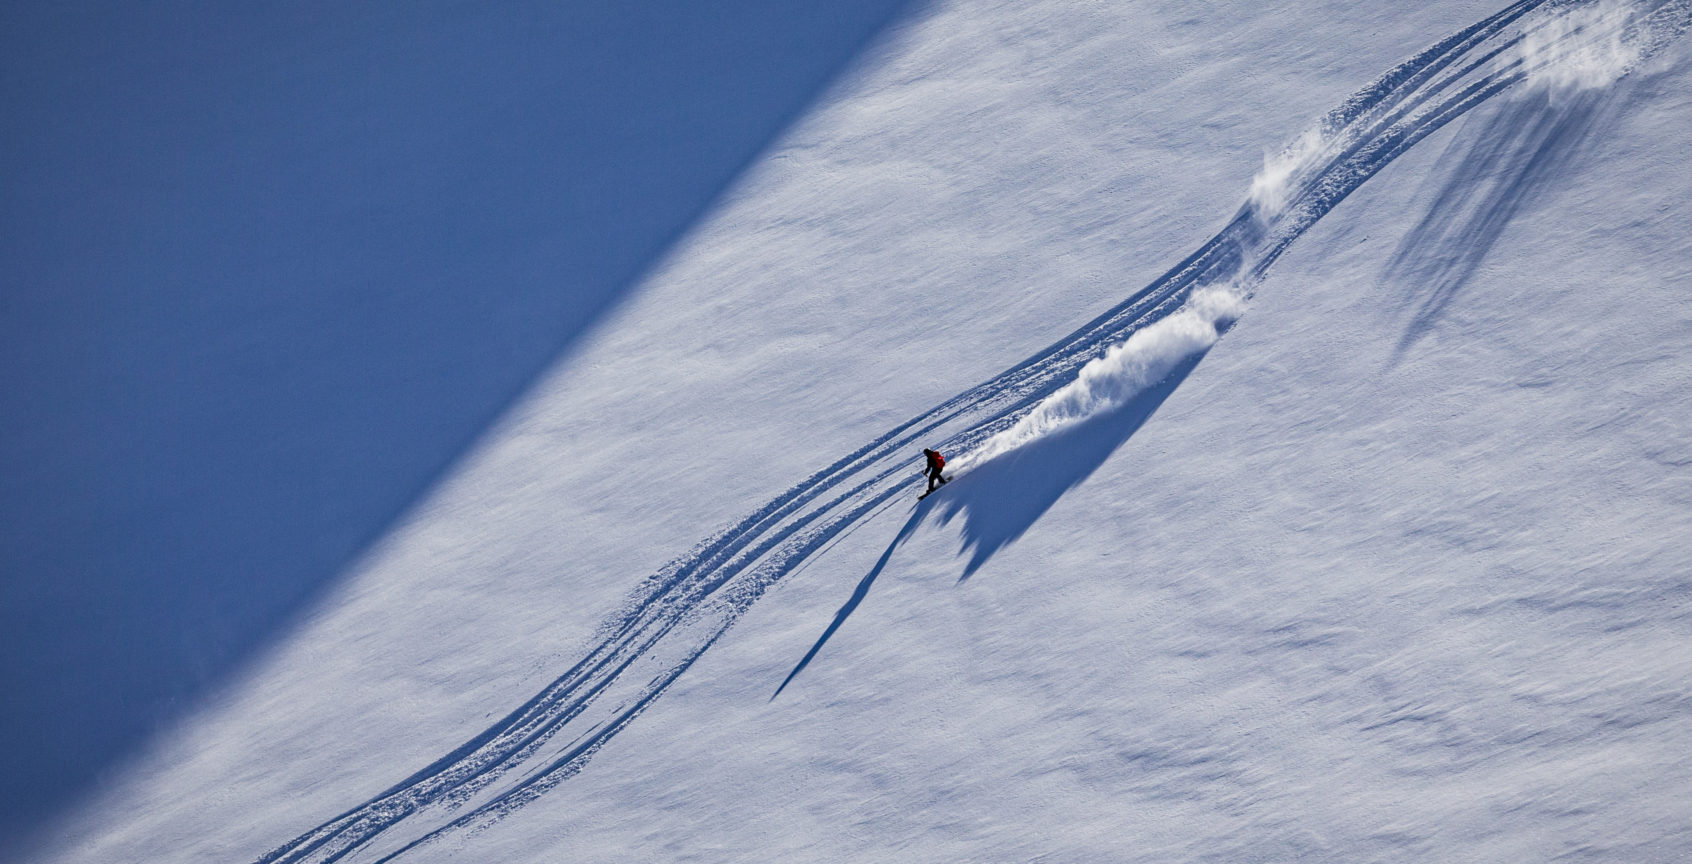 Snowboarder heliskiing powder in alpine terrain